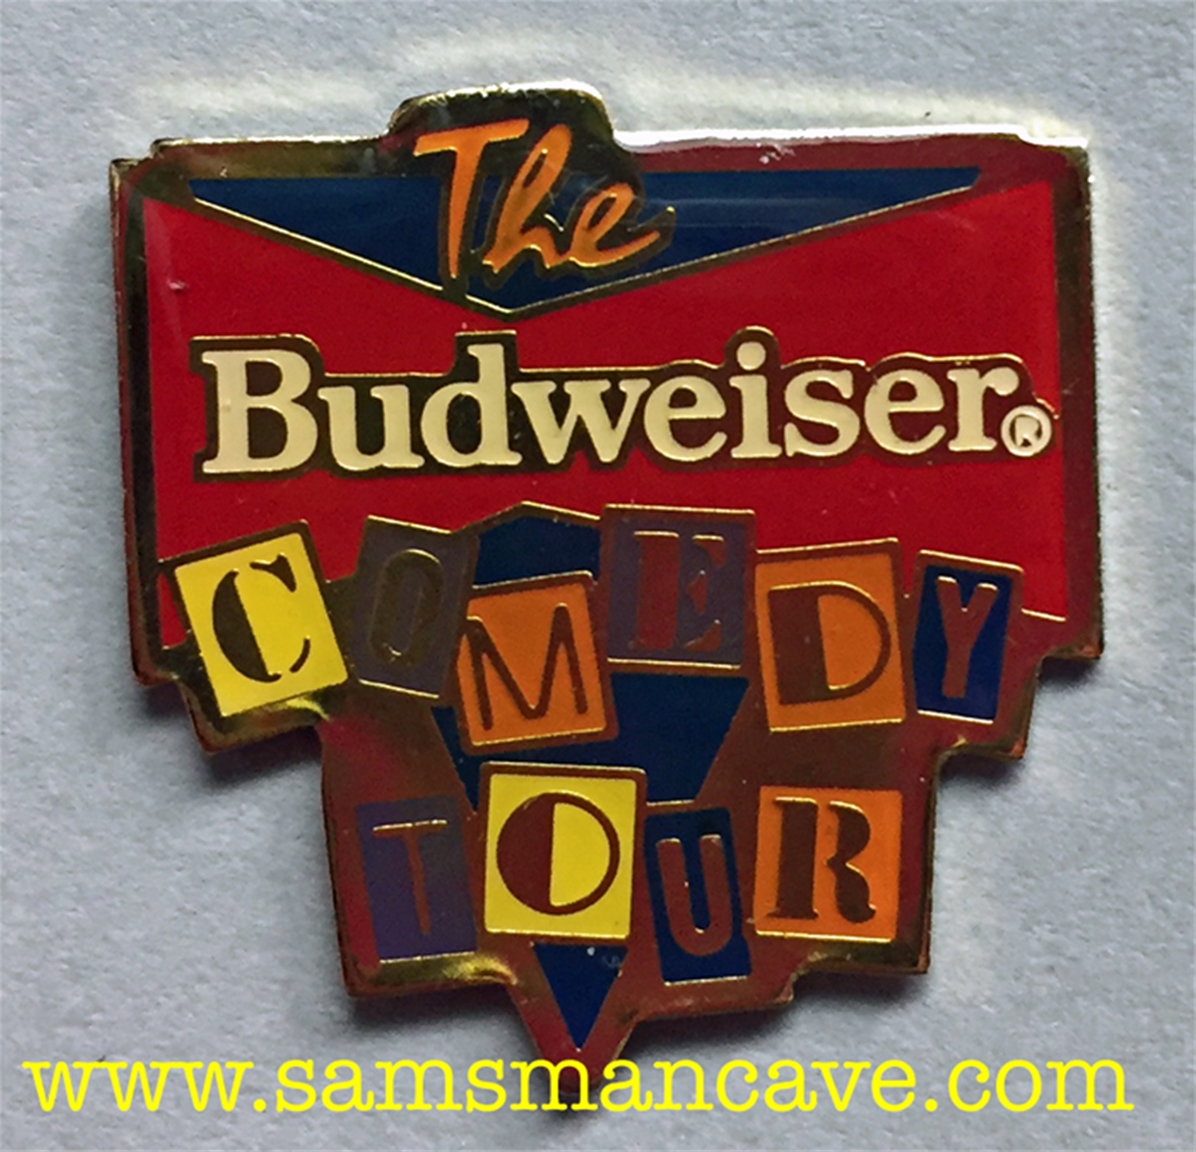 Budweiser Comedy Tour Pin